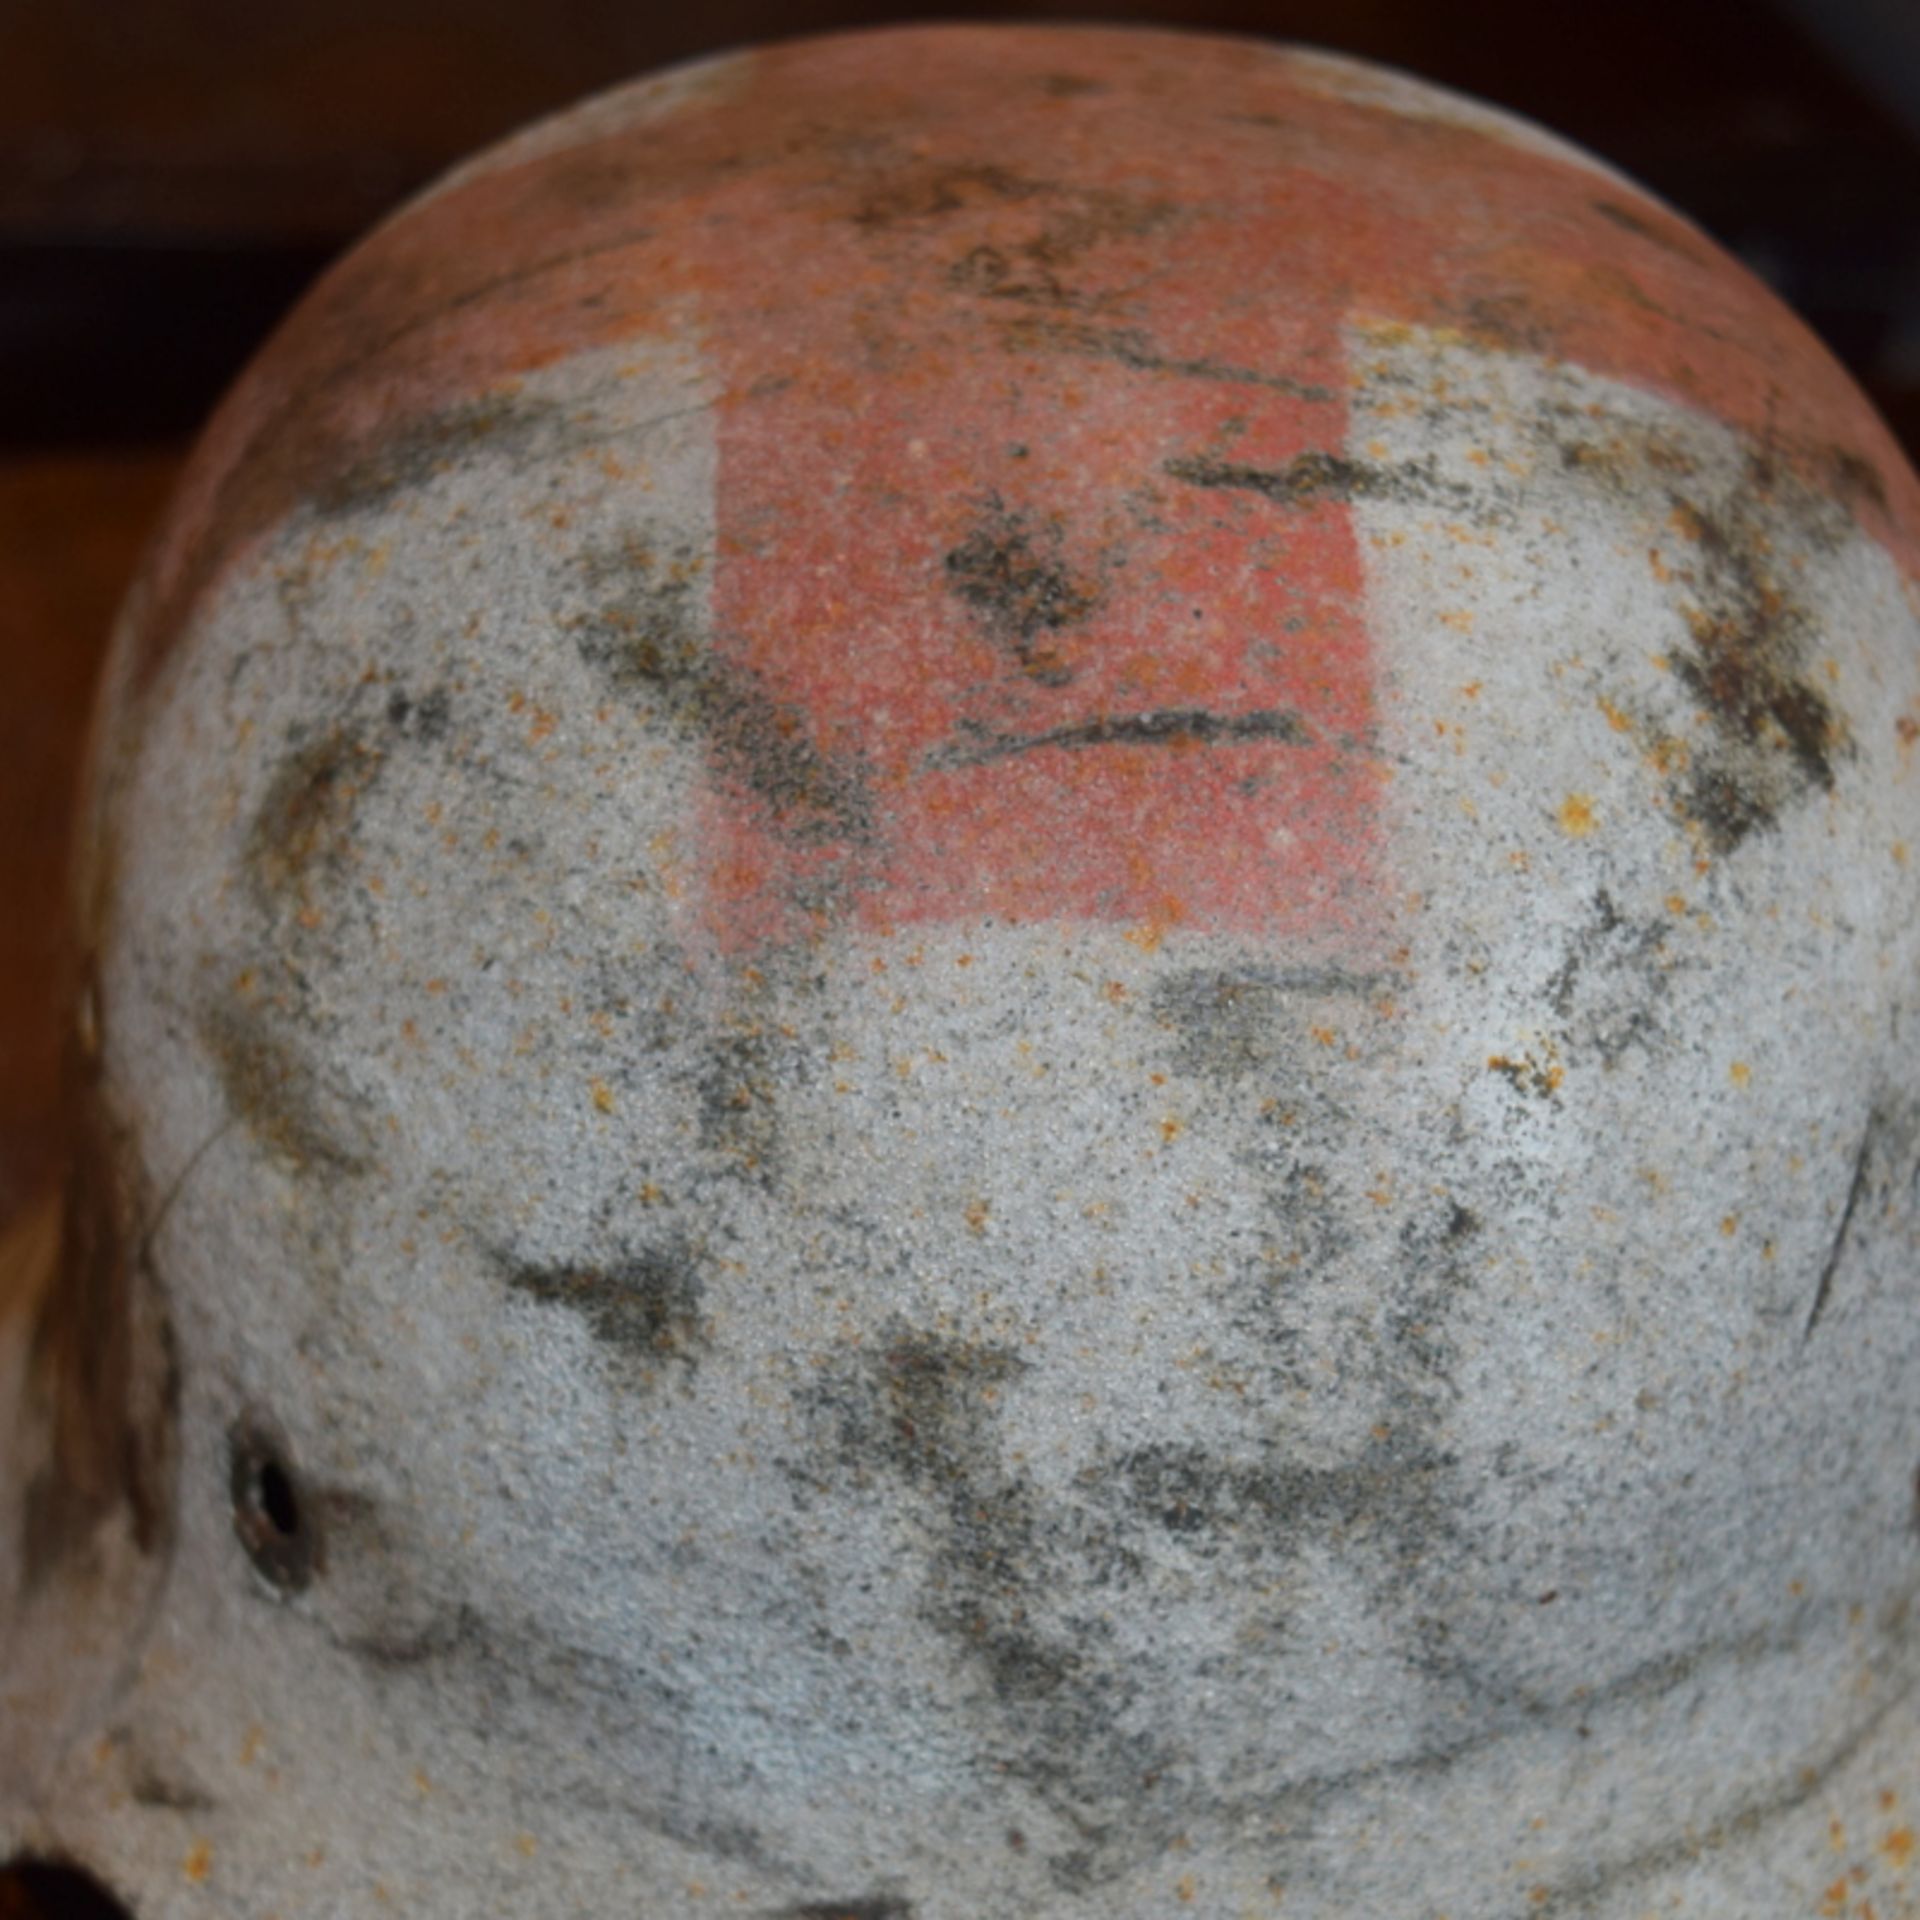 WW2 German S.S. Decal Helmet With Red Cross - Image 5 of 5